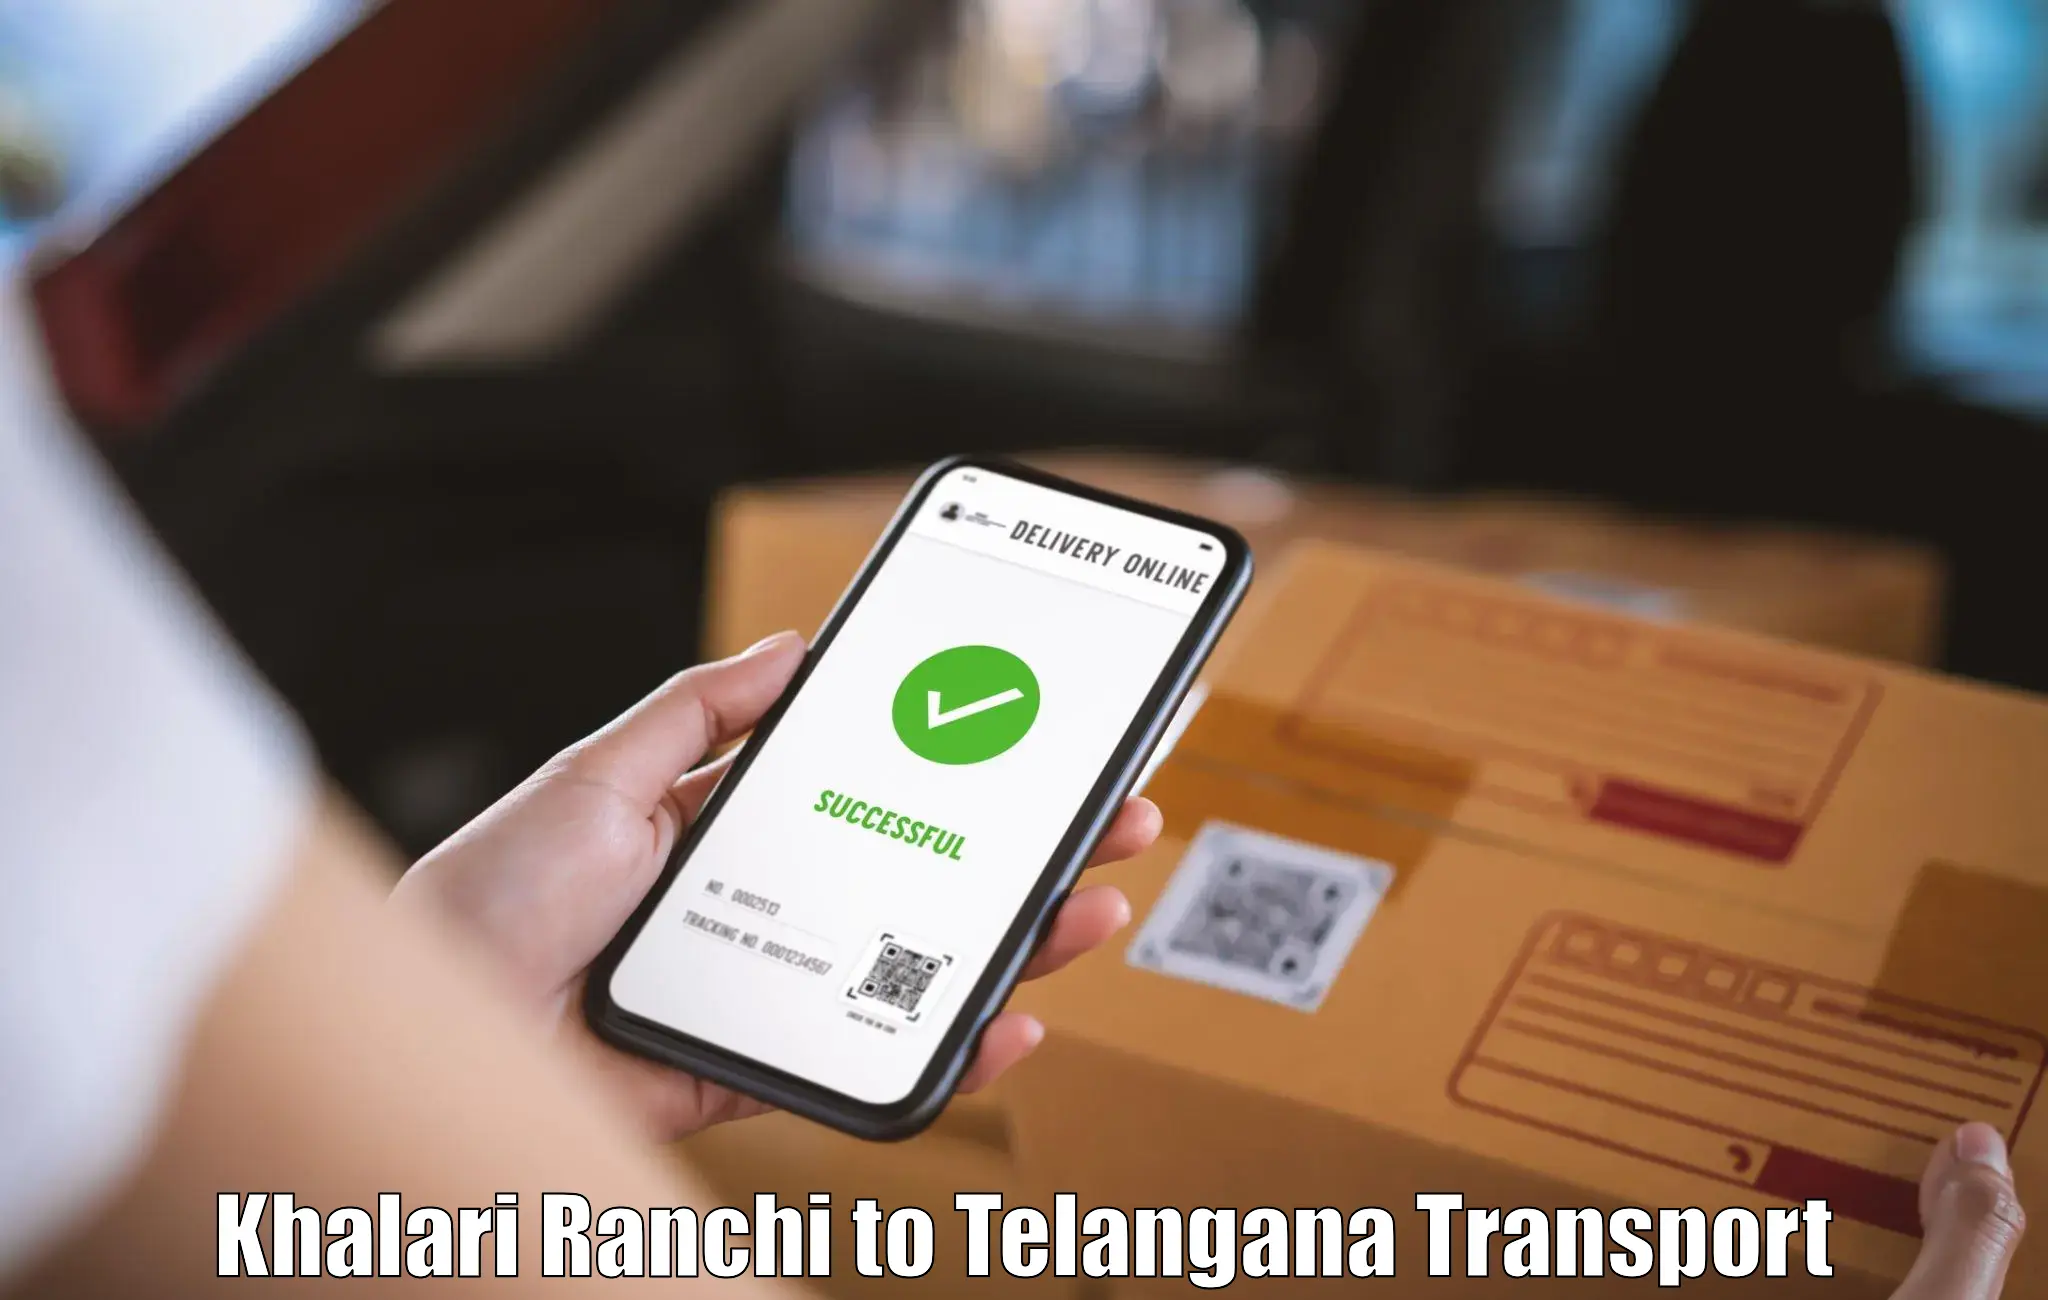 Nearby transport service Khalari Ranchi to Danthalapally